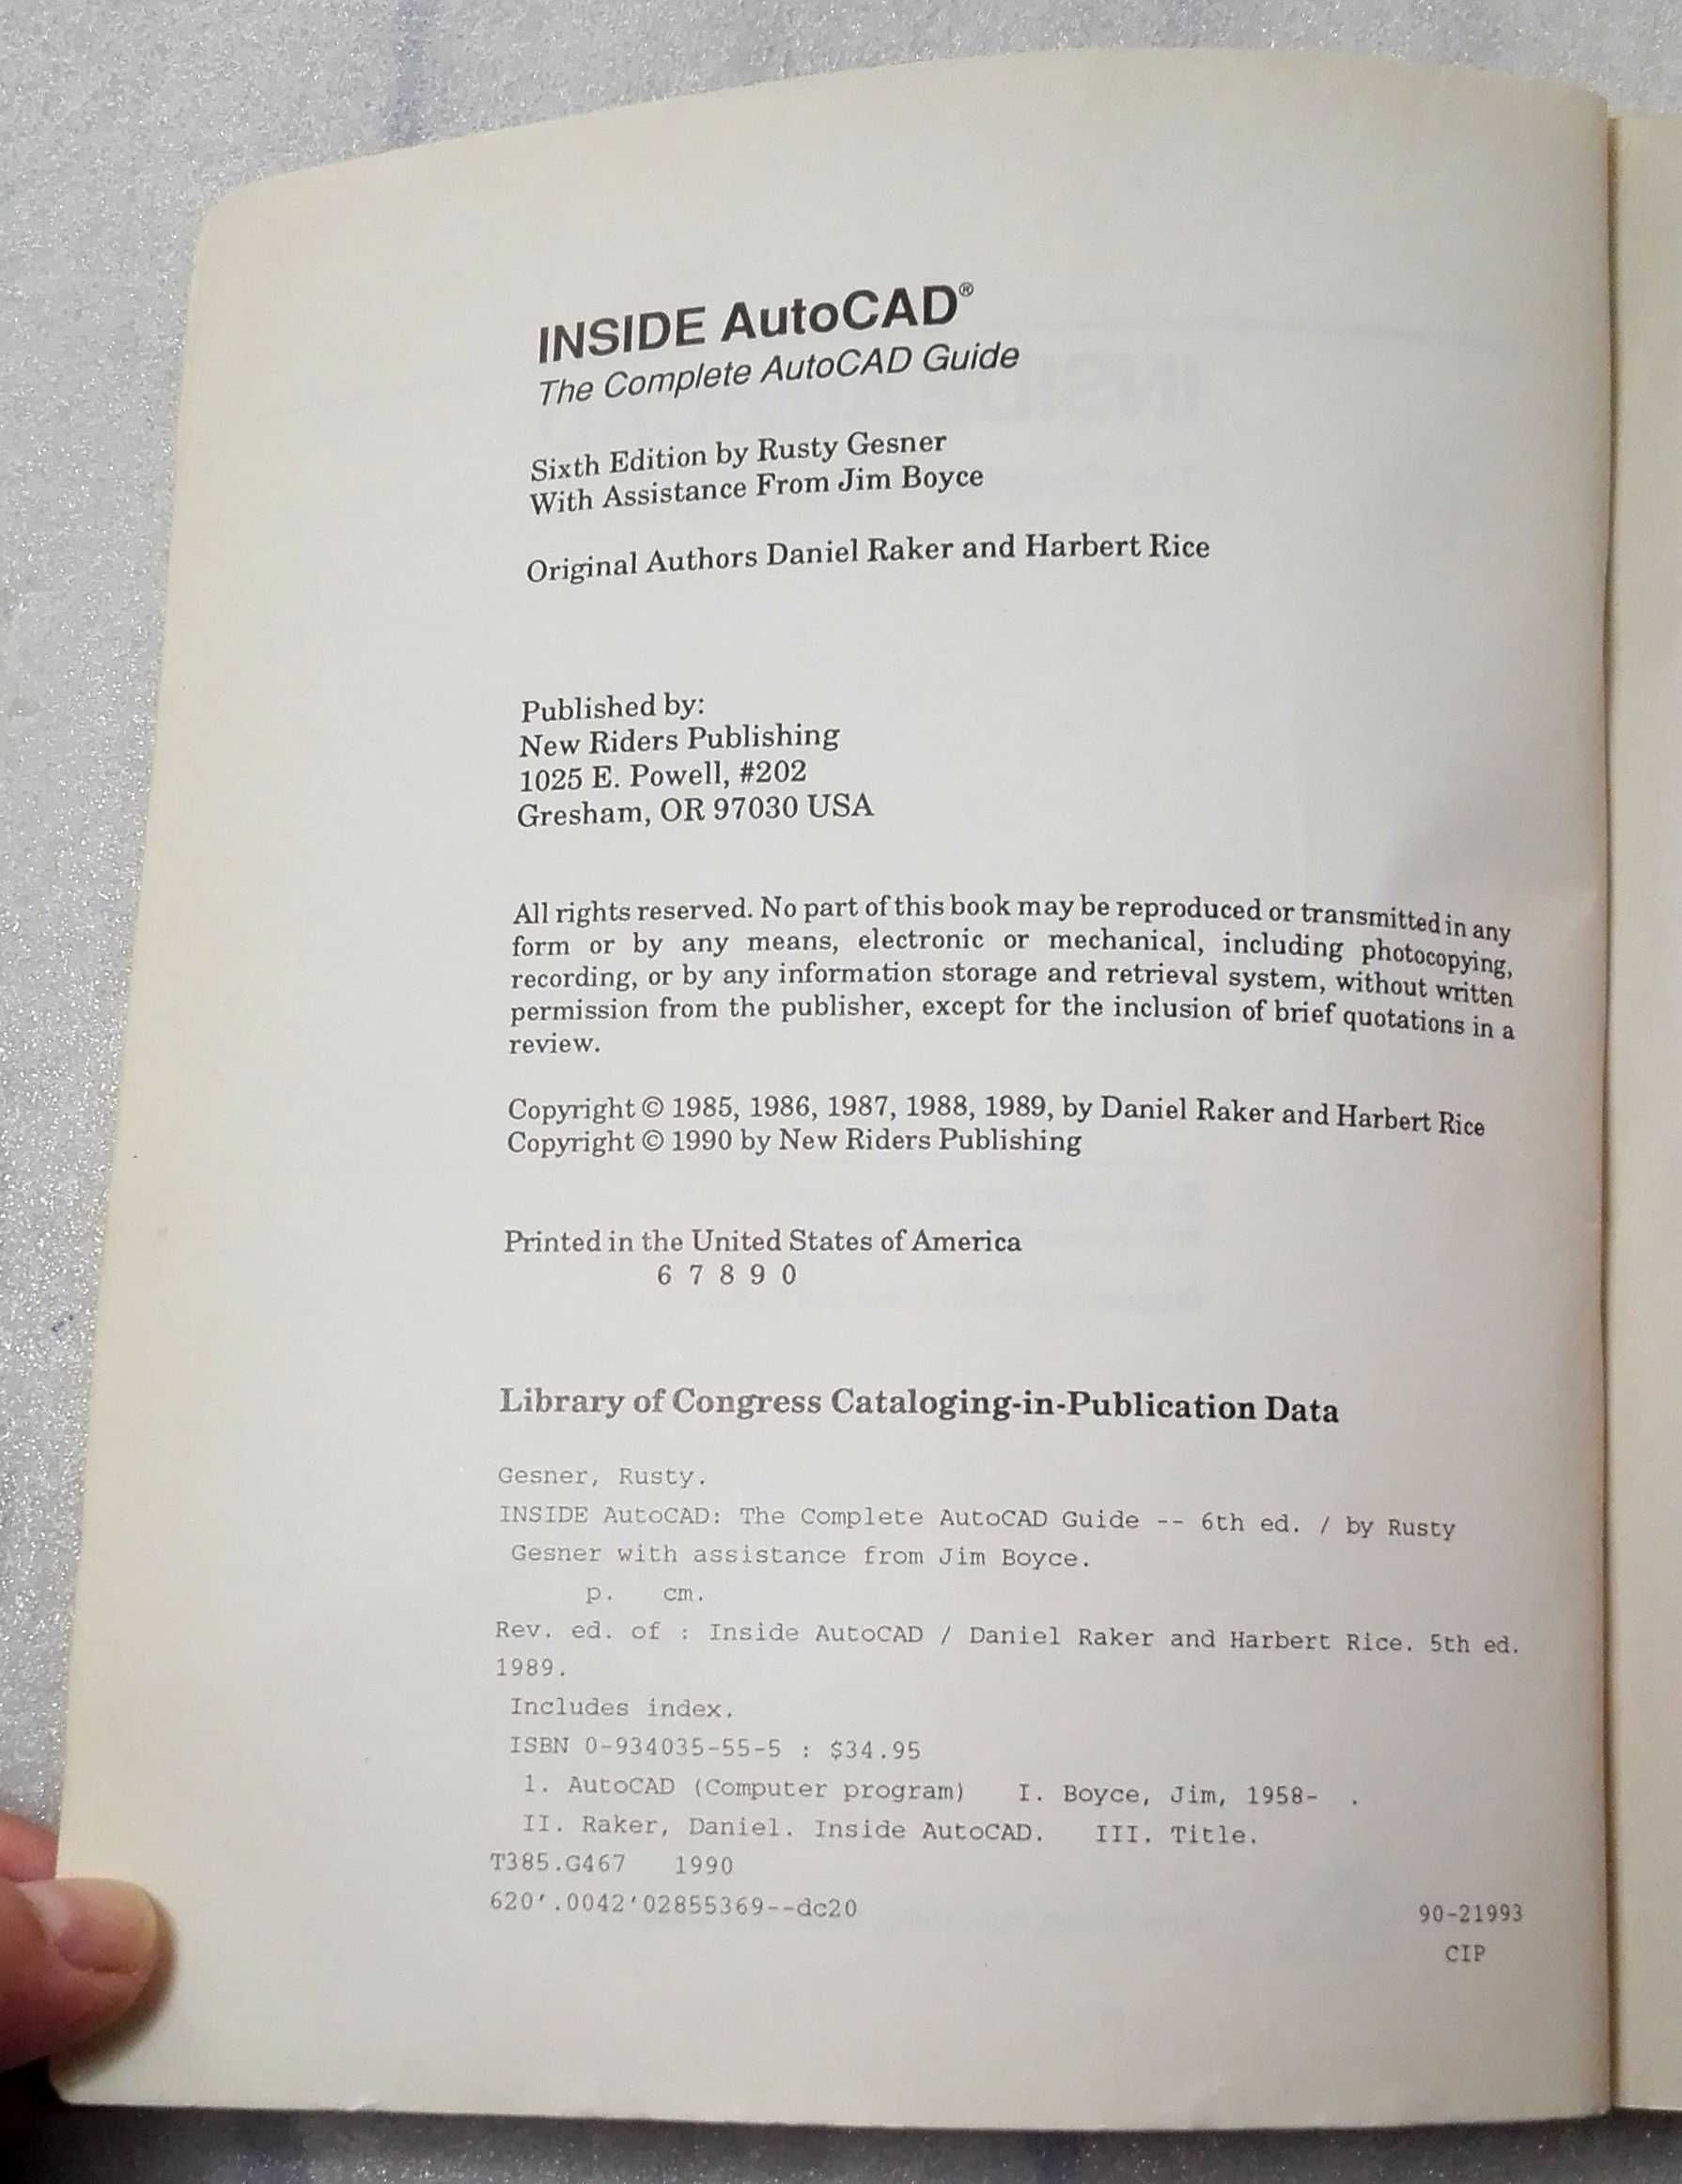 Livro Inside Autocad – The Complete AutoCAD Guide